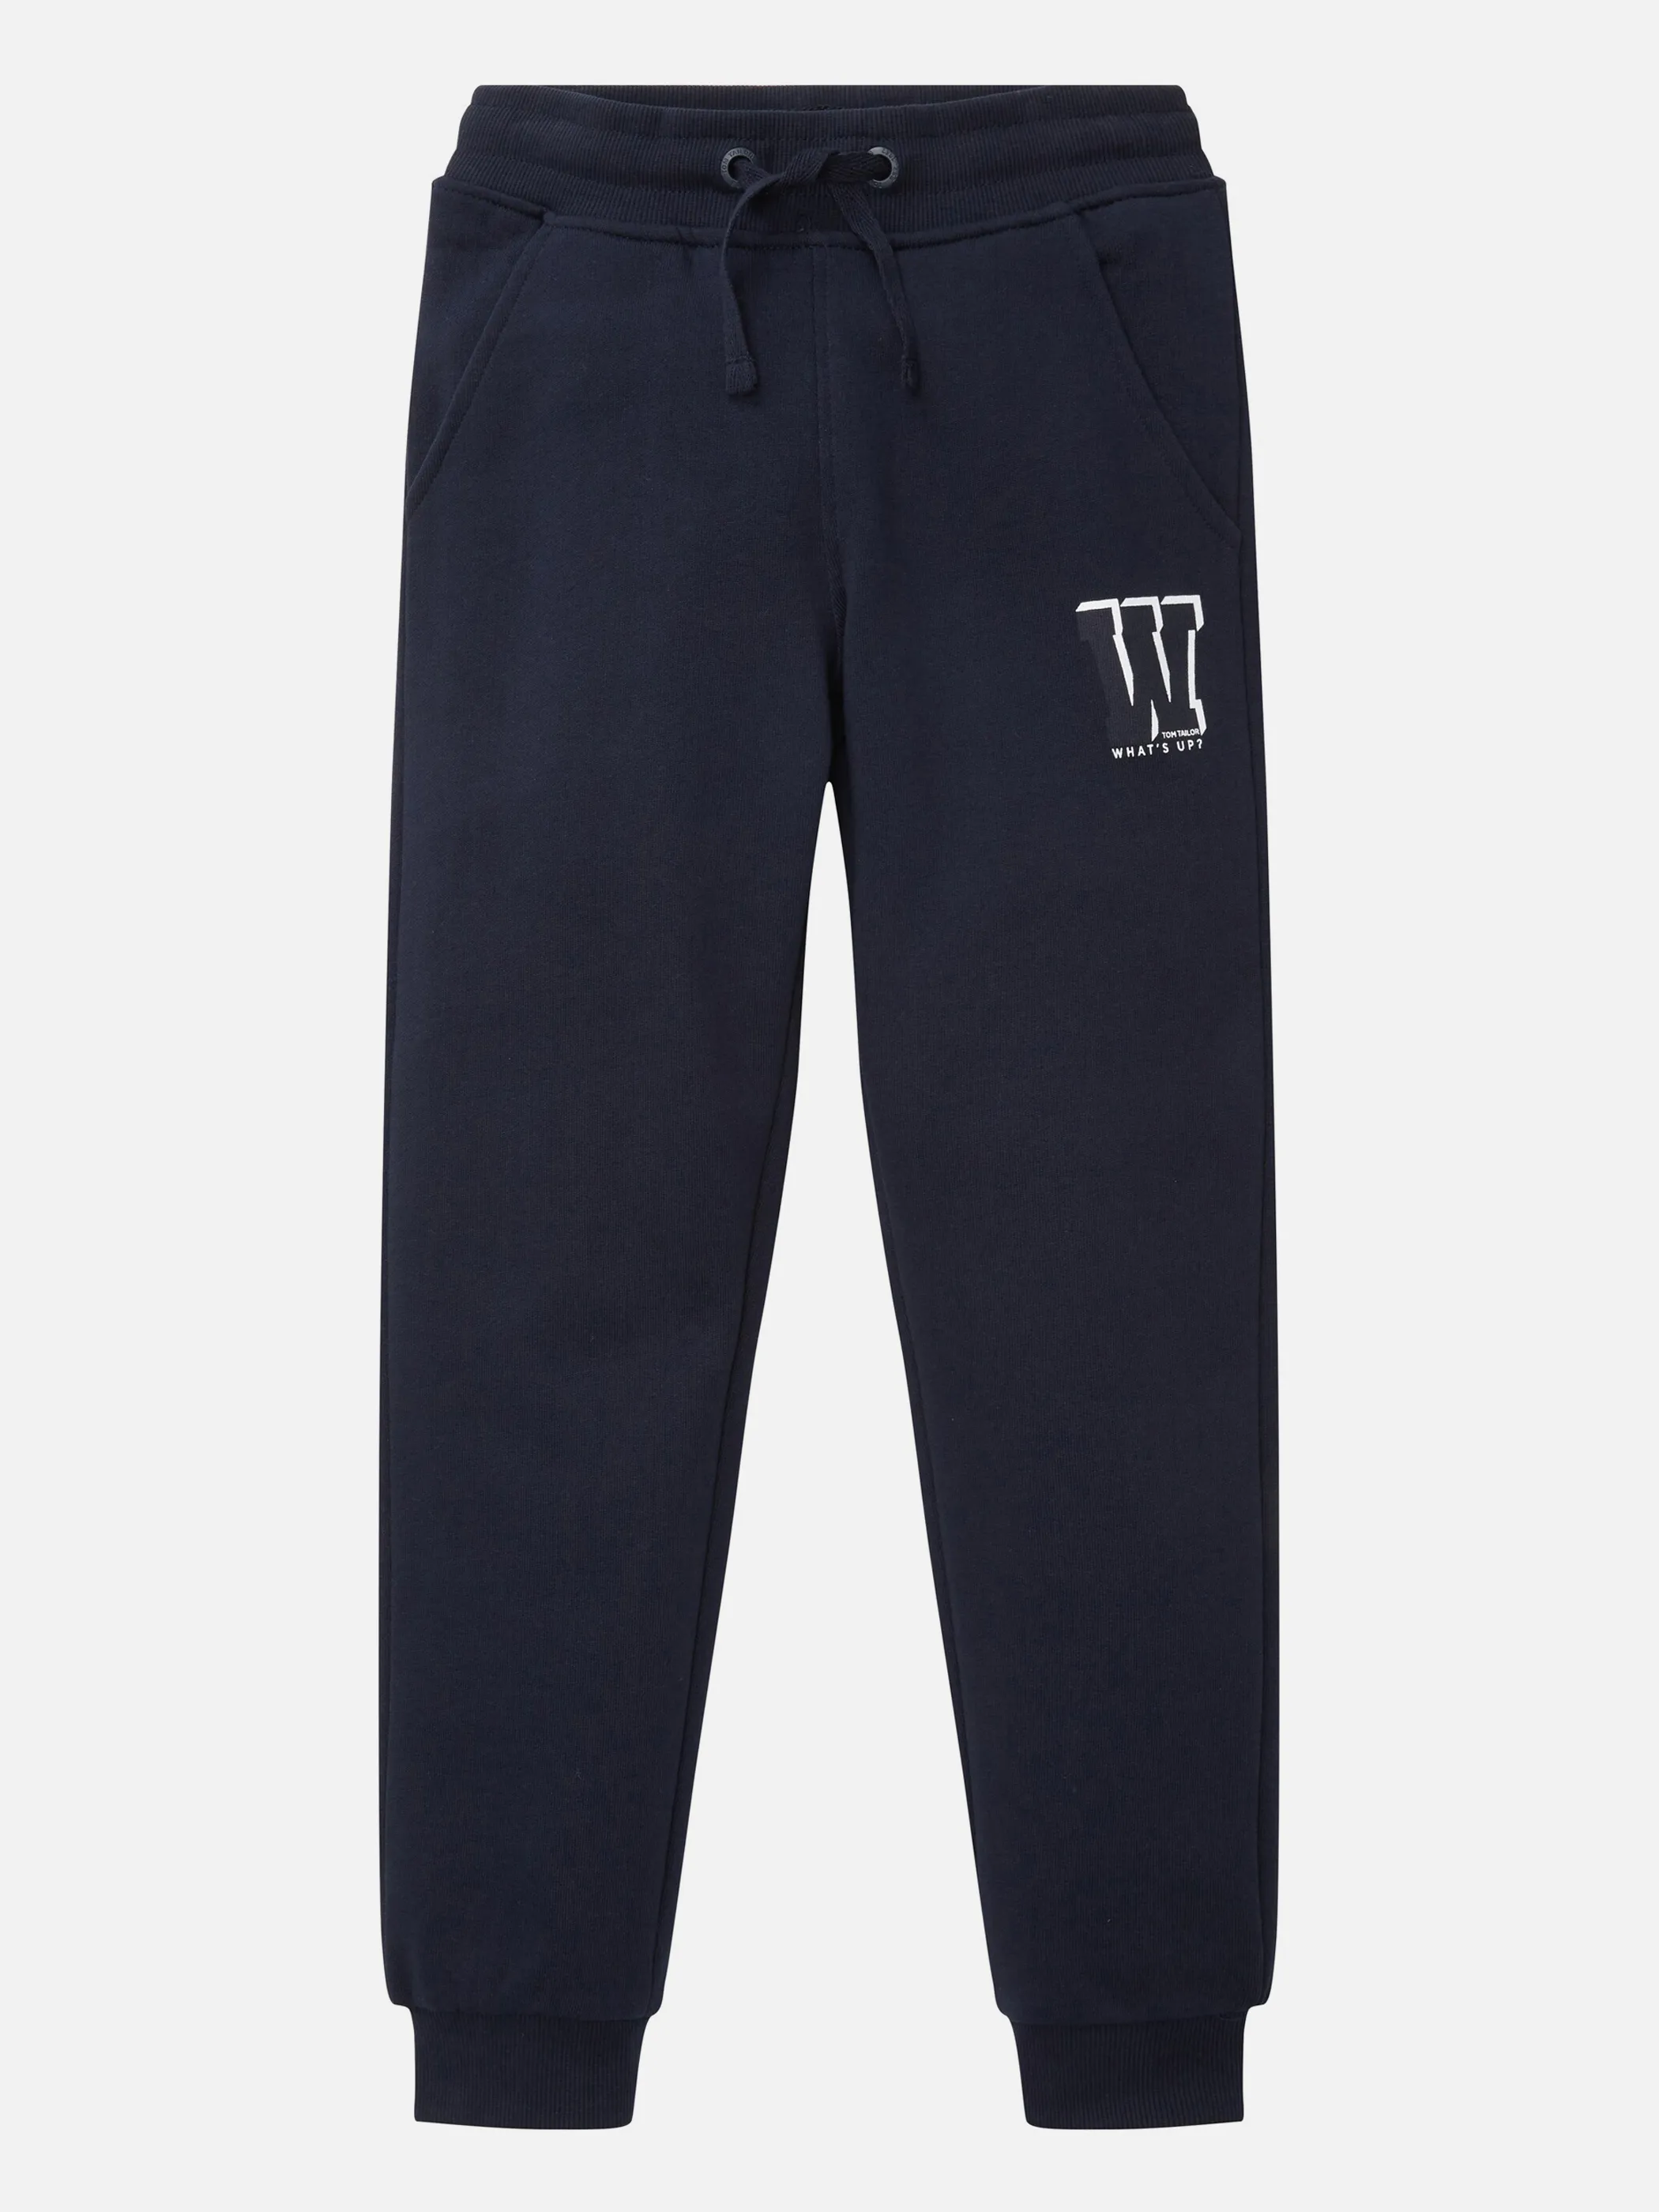 Tom Tailor 1033176 printed sweatpants Blau 869647 10668 1